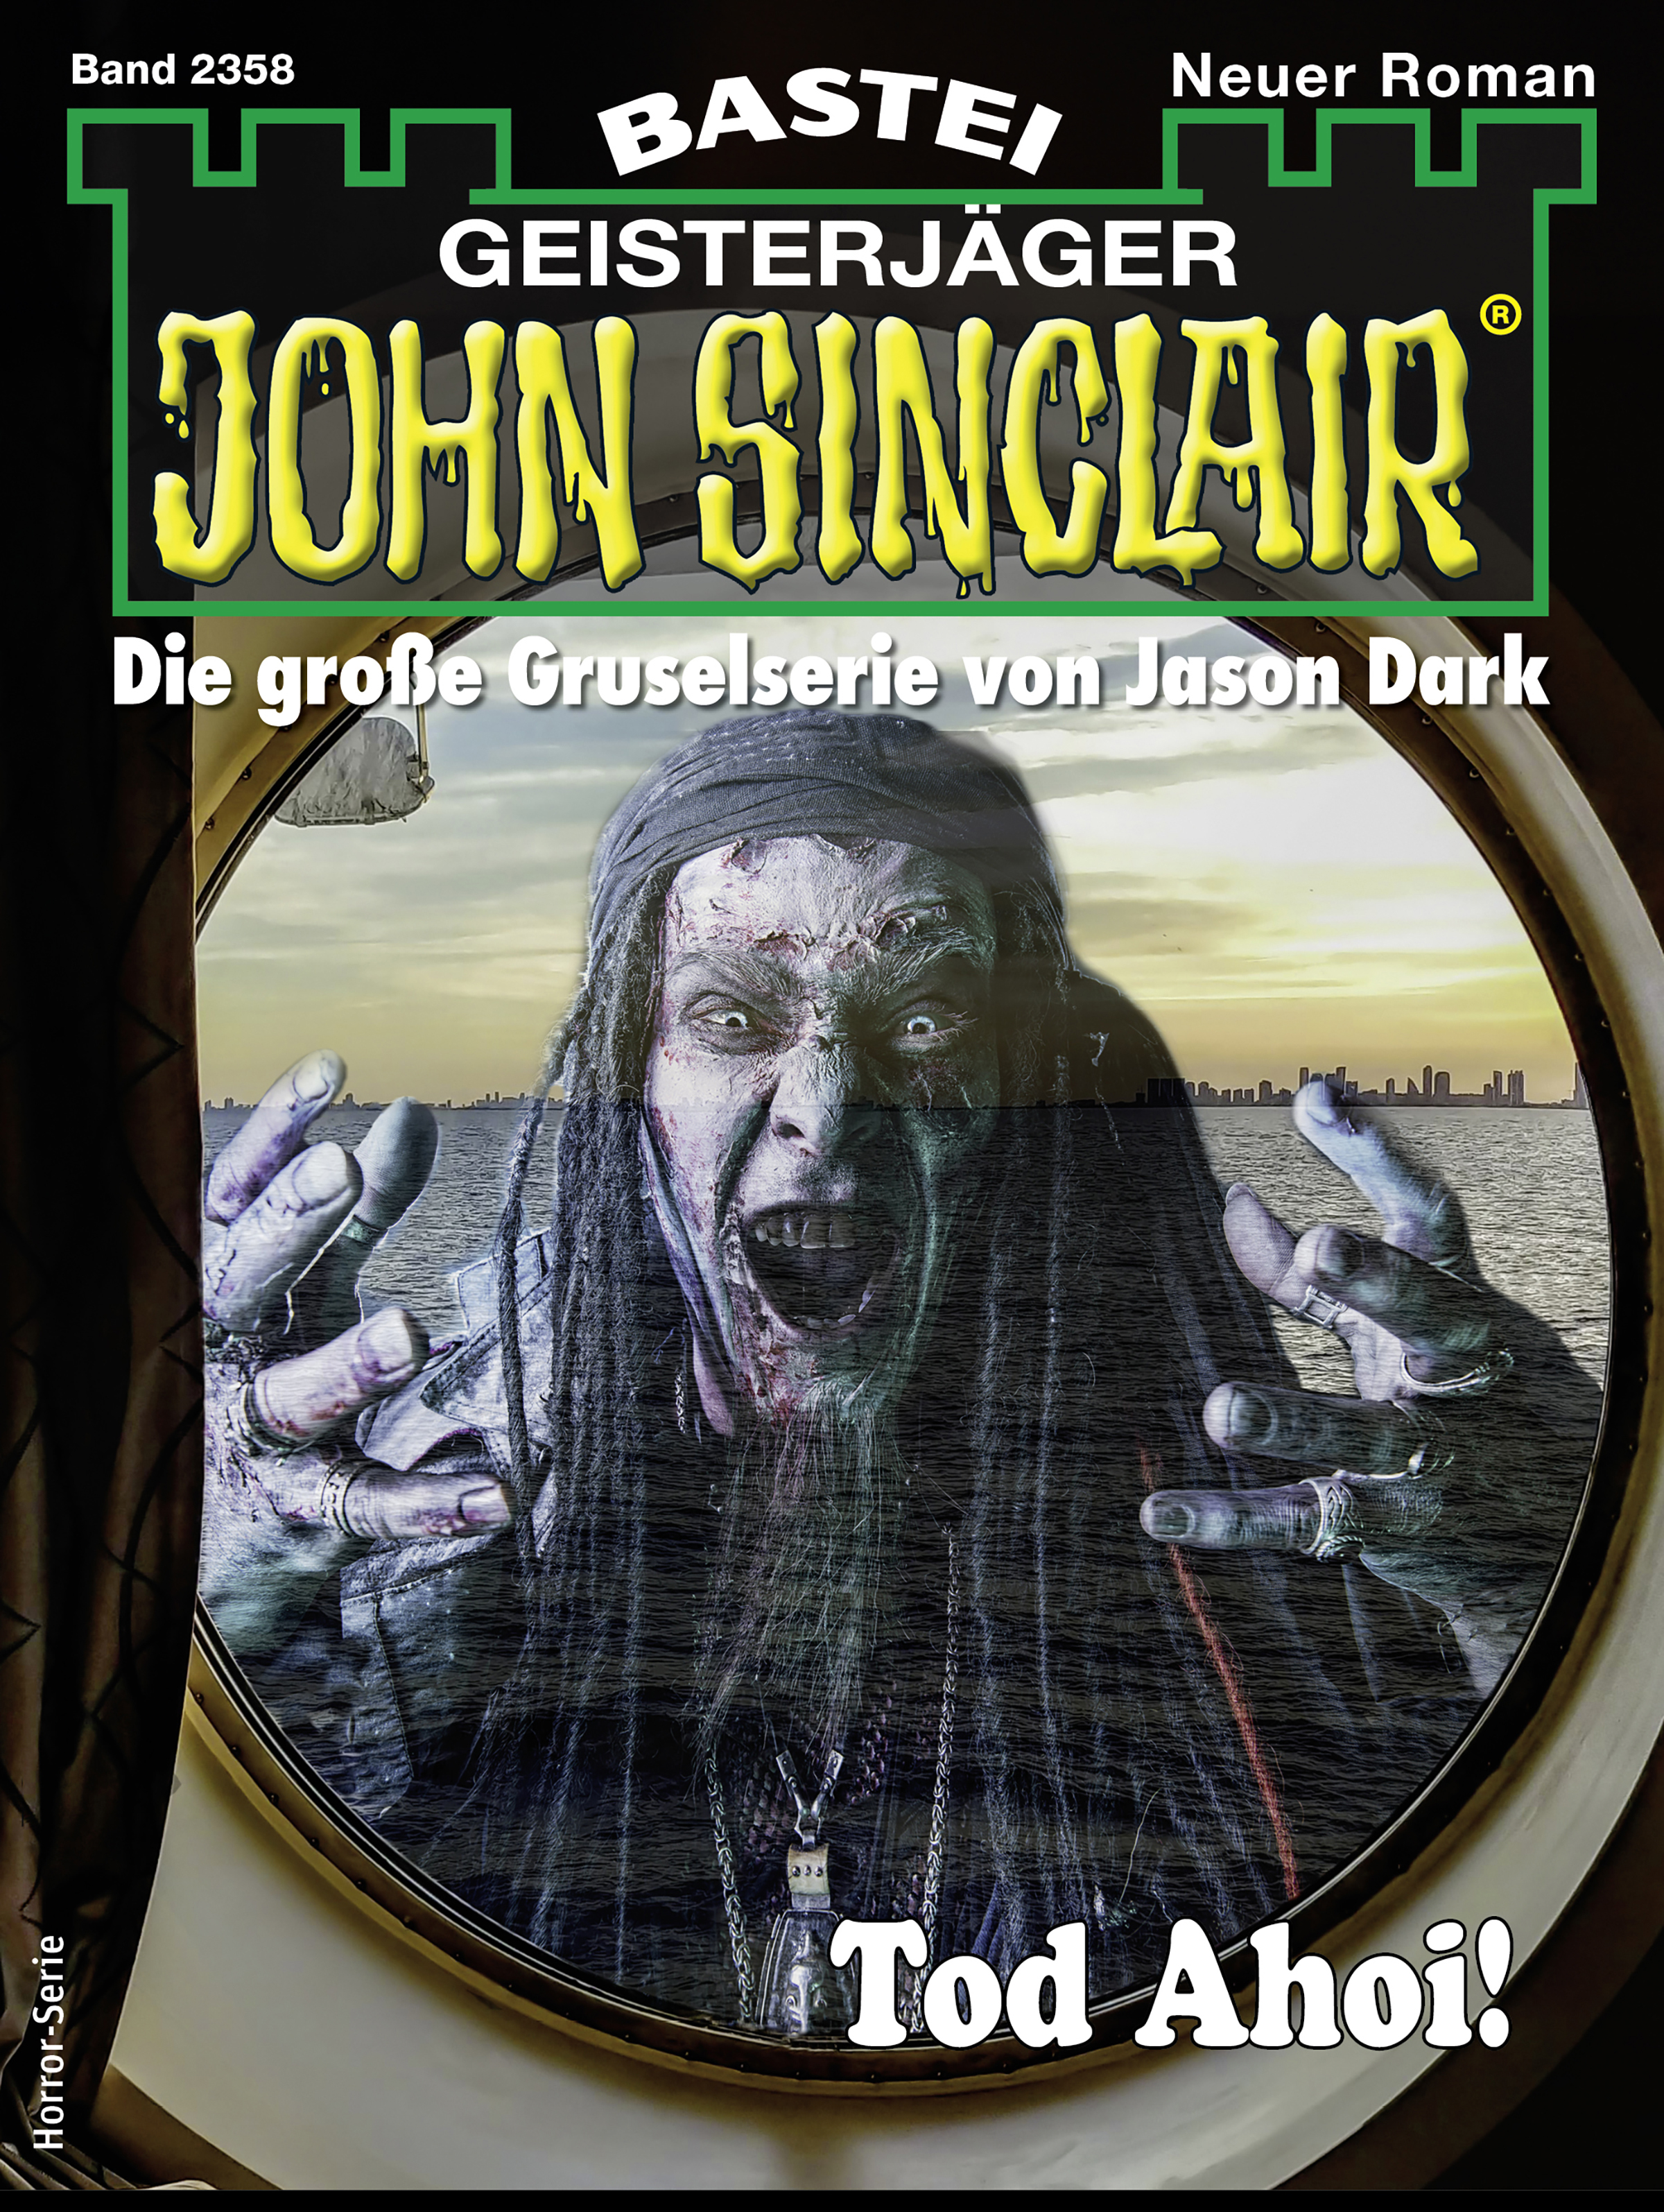 John Sinclair